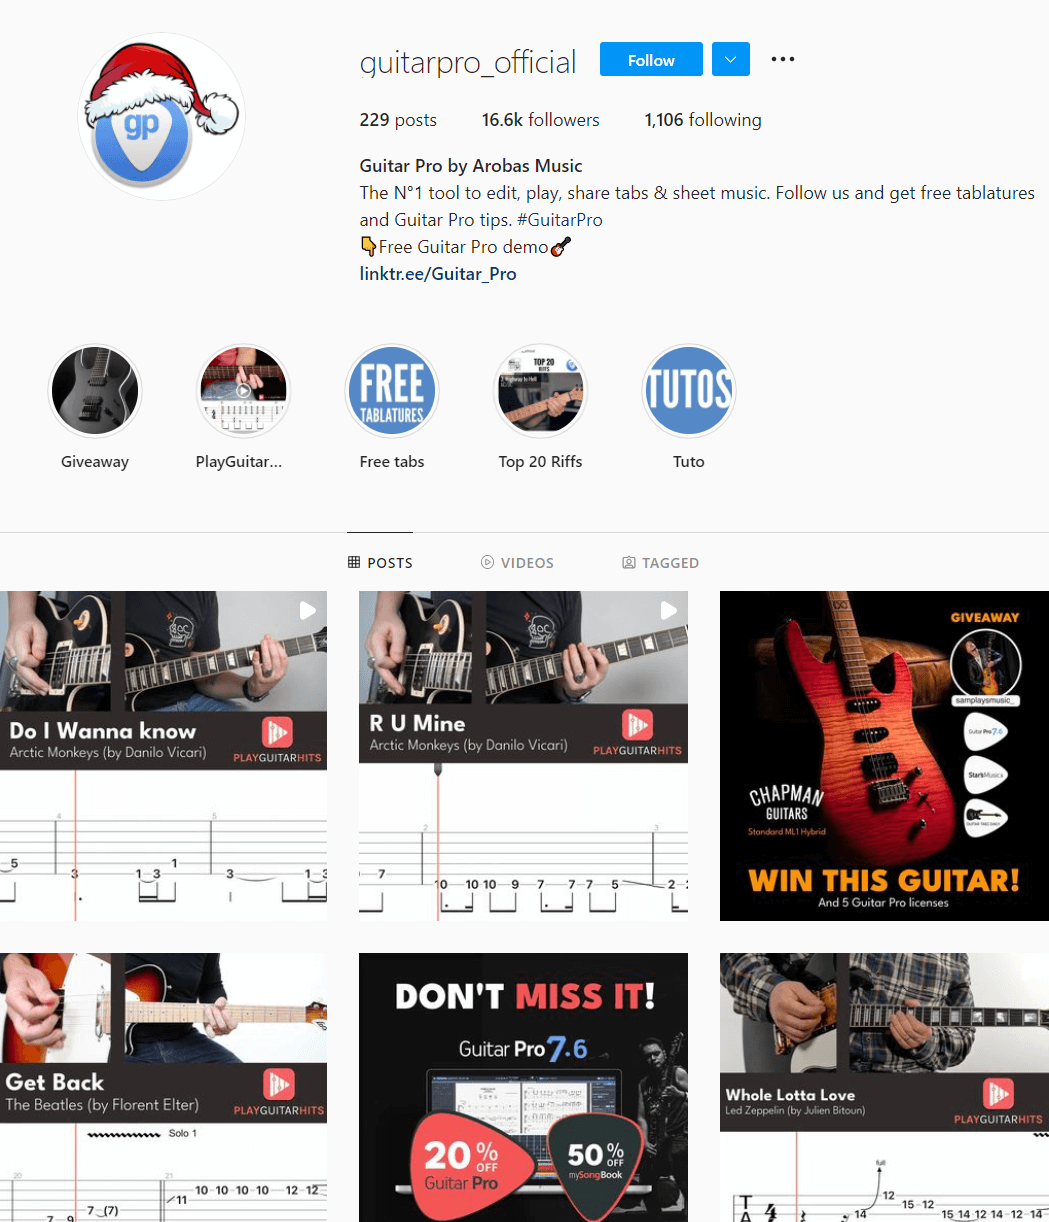 guitarpro_official Instagram page